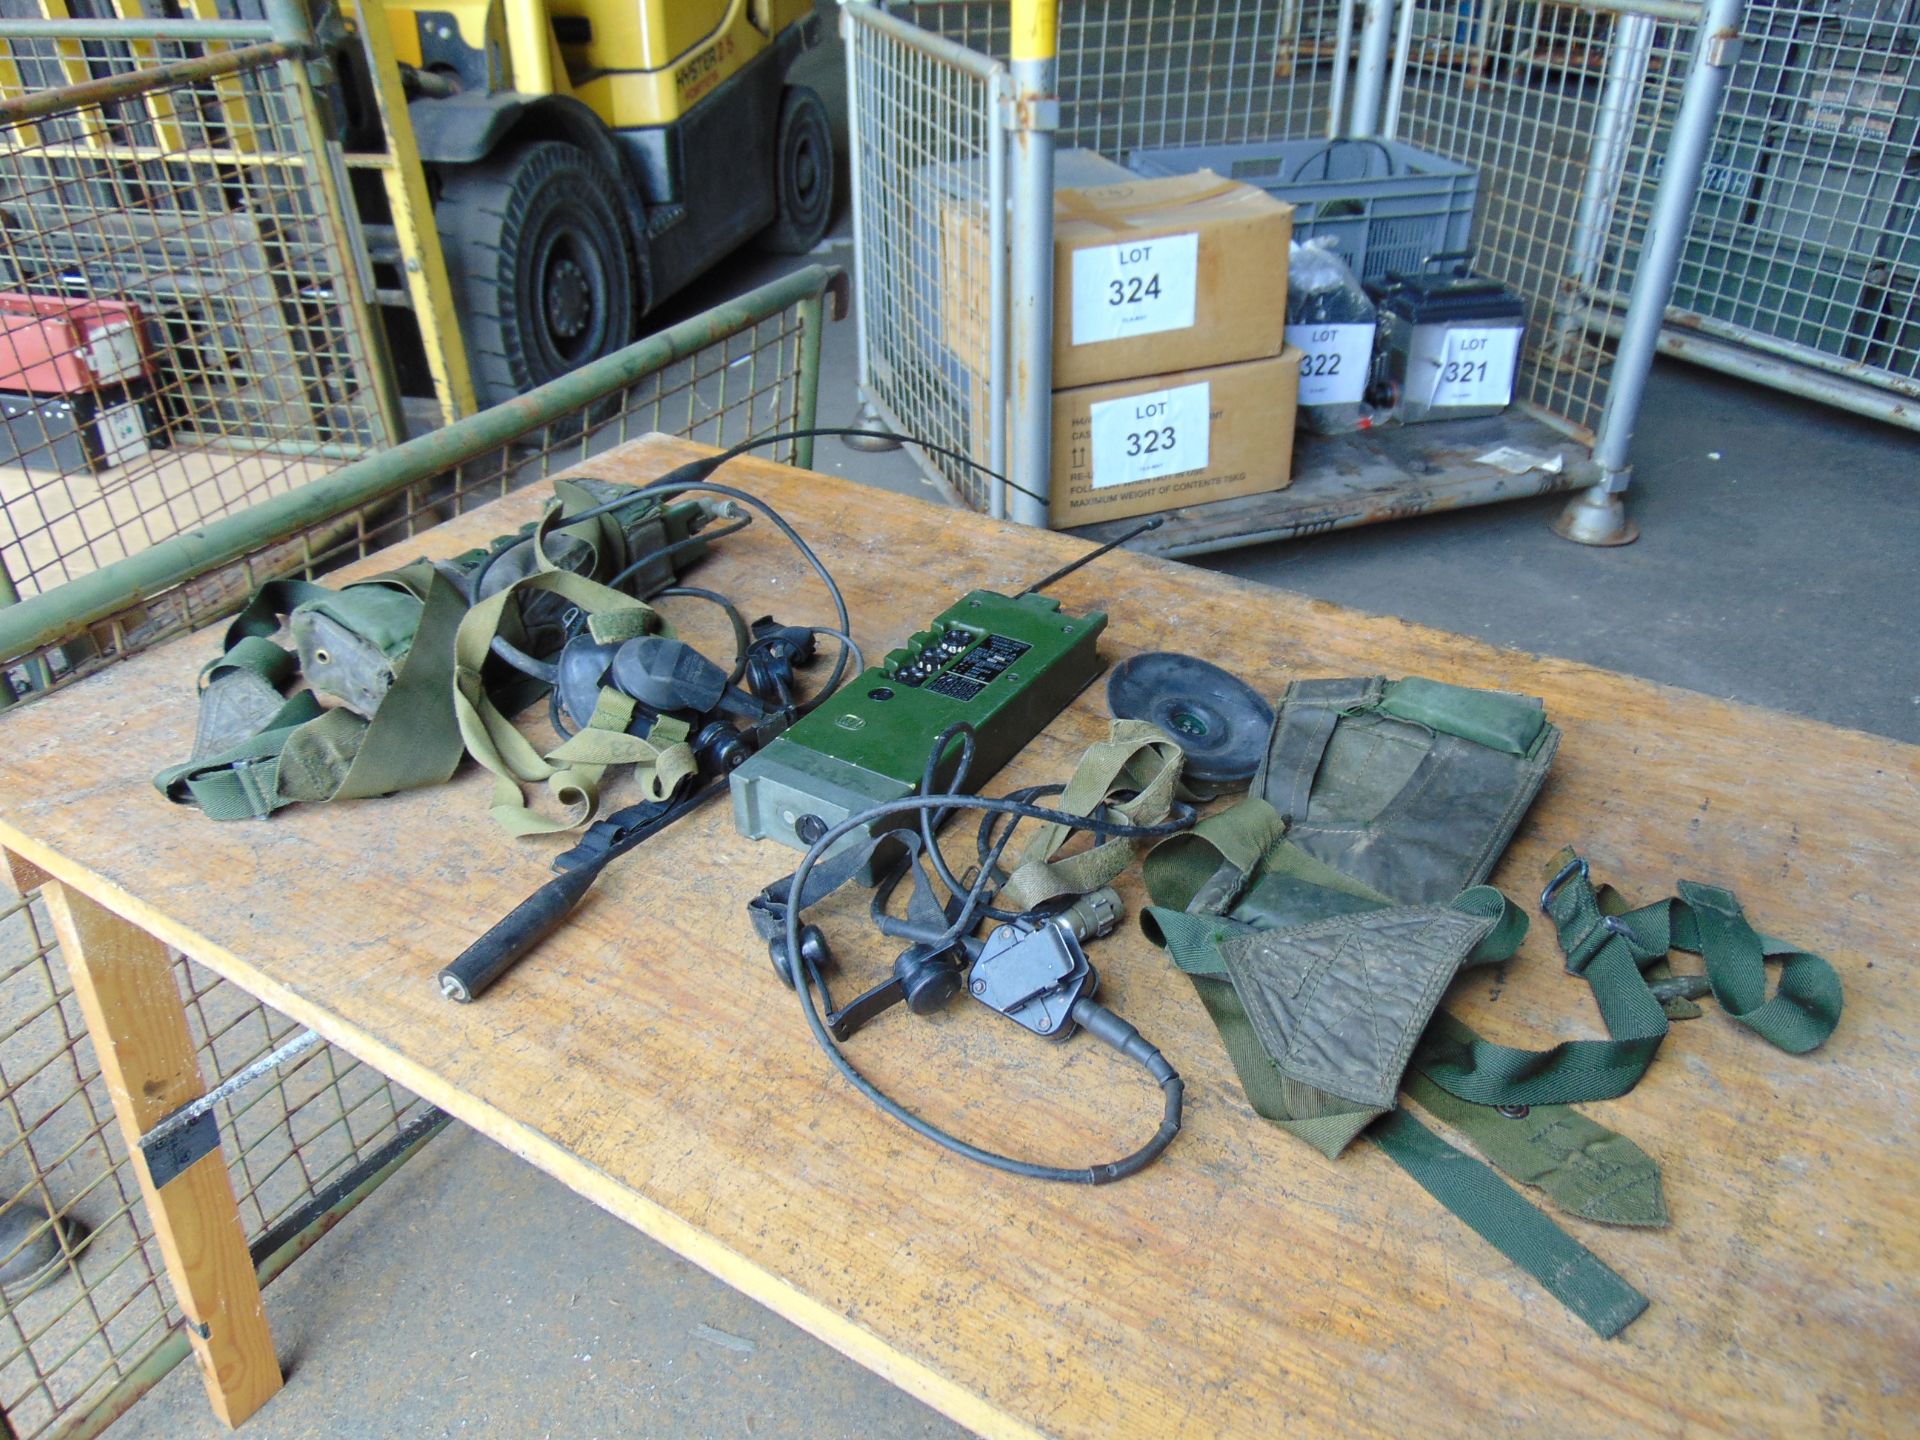 2 x RT 349 British Army Transmitter / Receiver c/w Pouch, Headset, Antenna and Battery Cassette. - Bild 4 aus 5